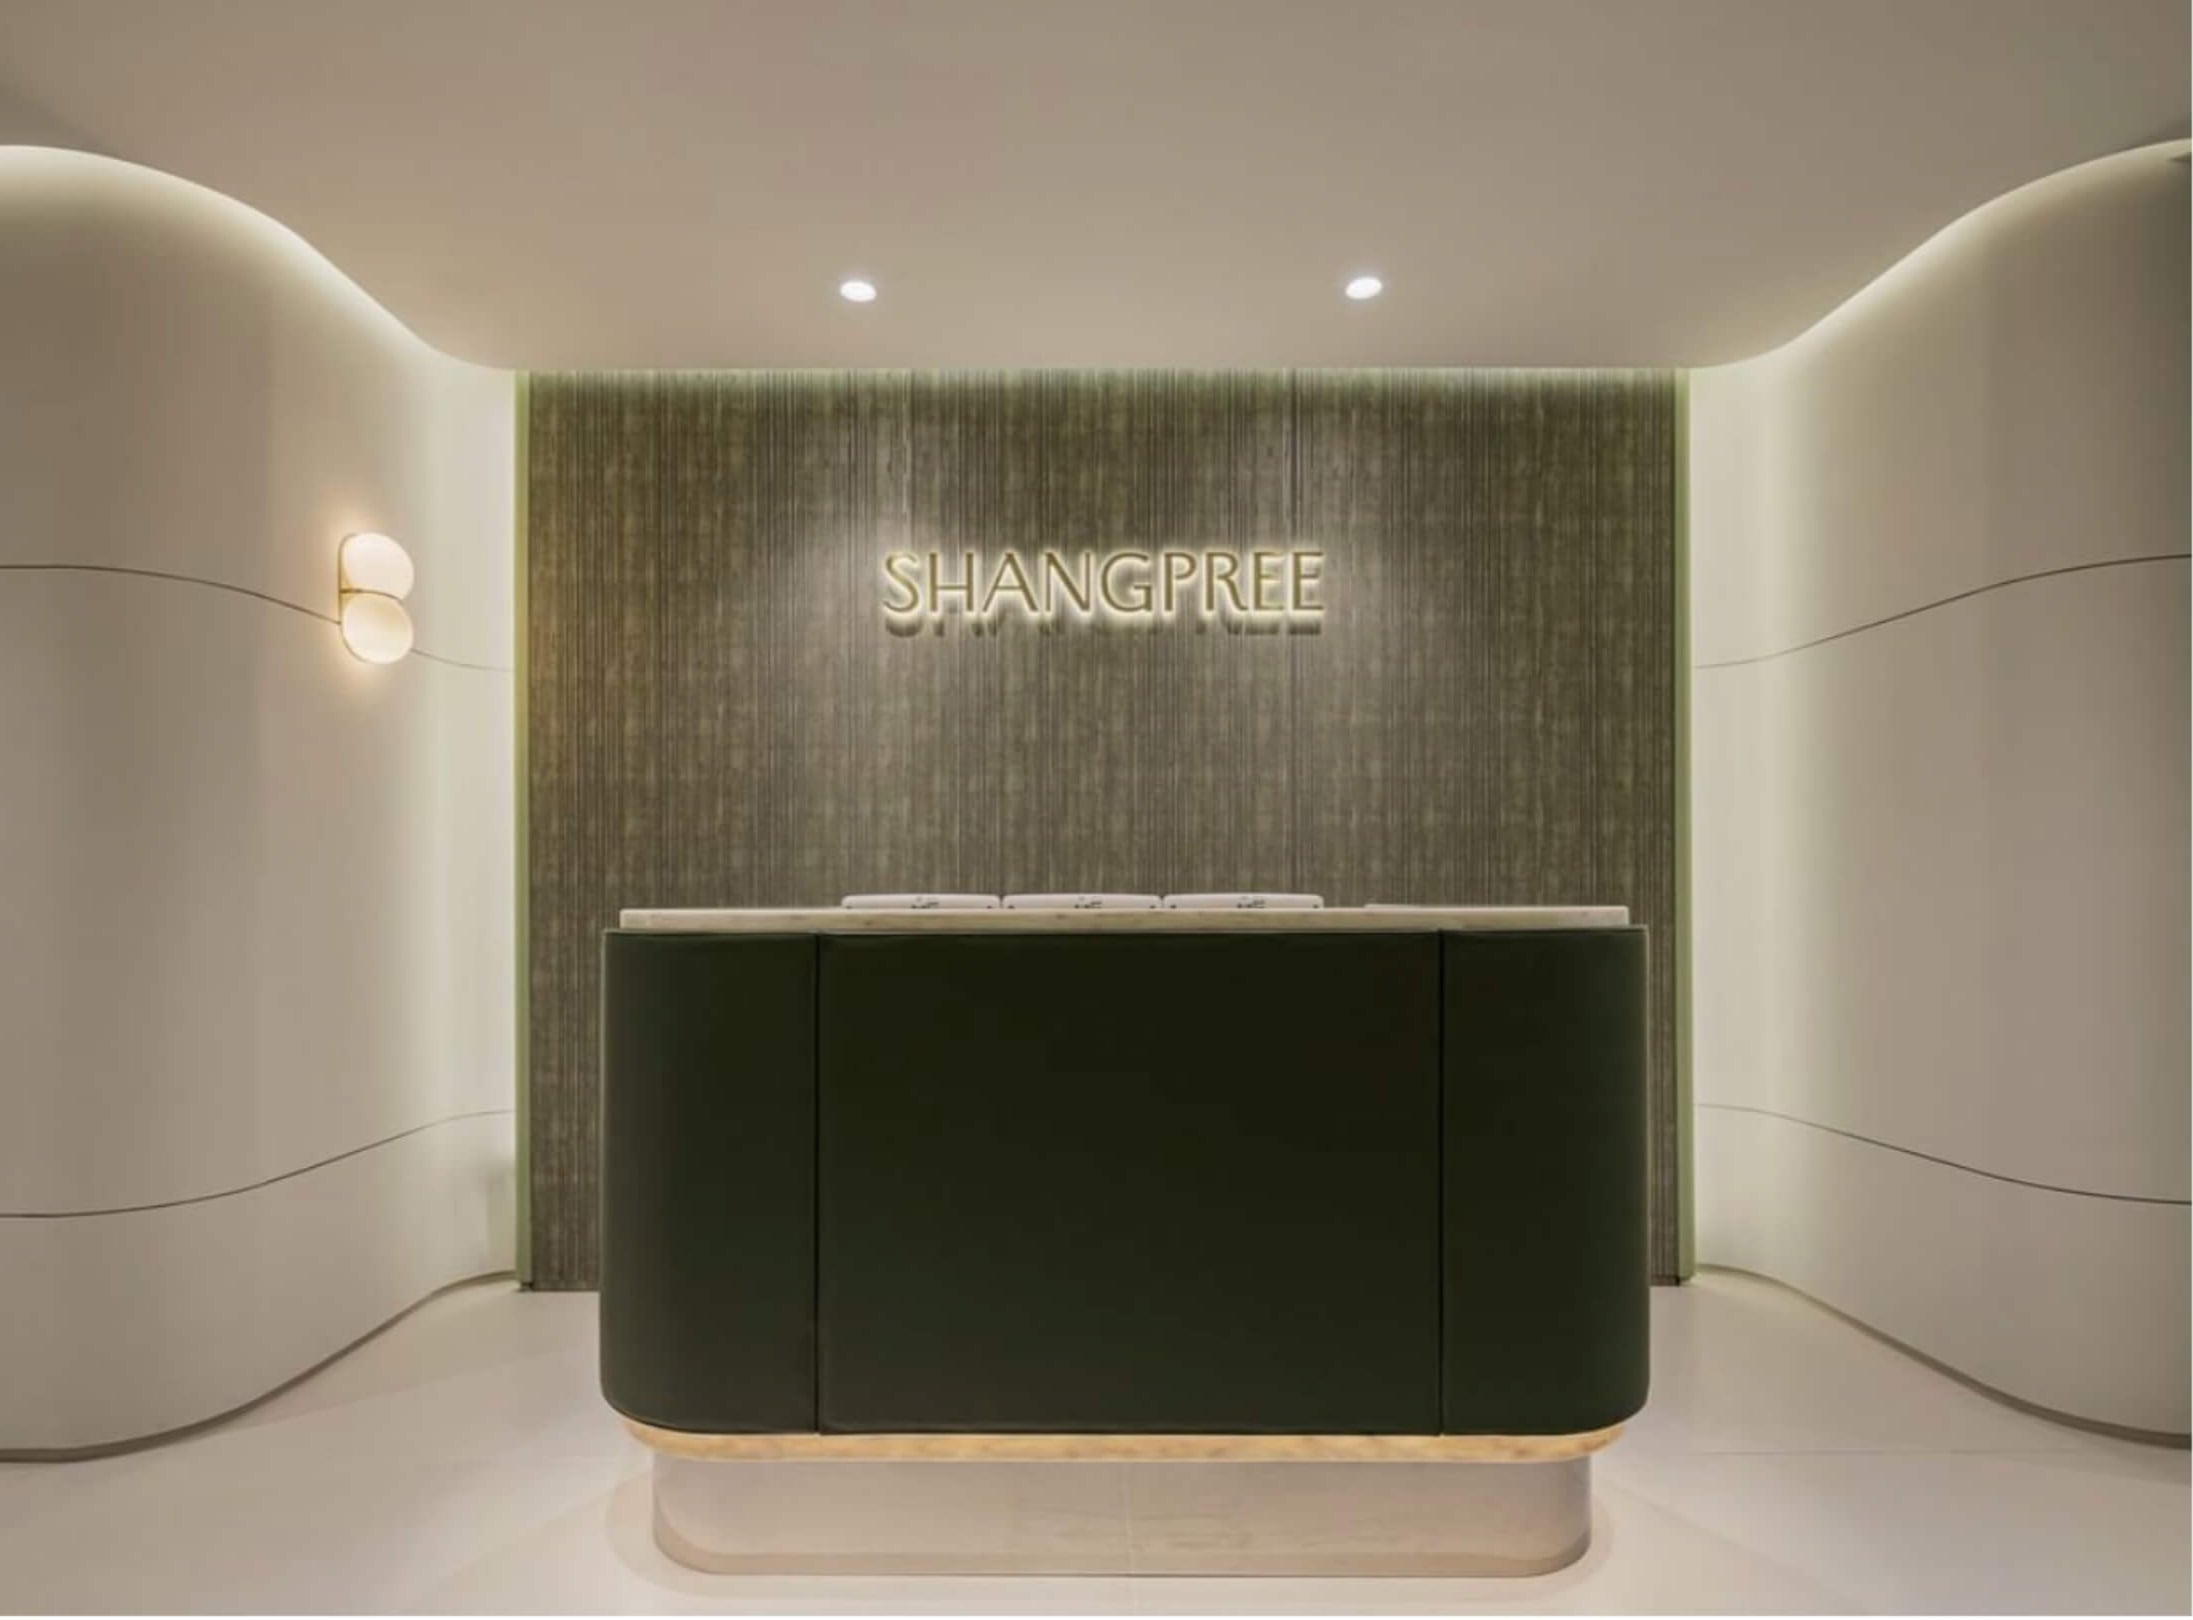 Shangpree, Luxury Korean Skincare Mexico